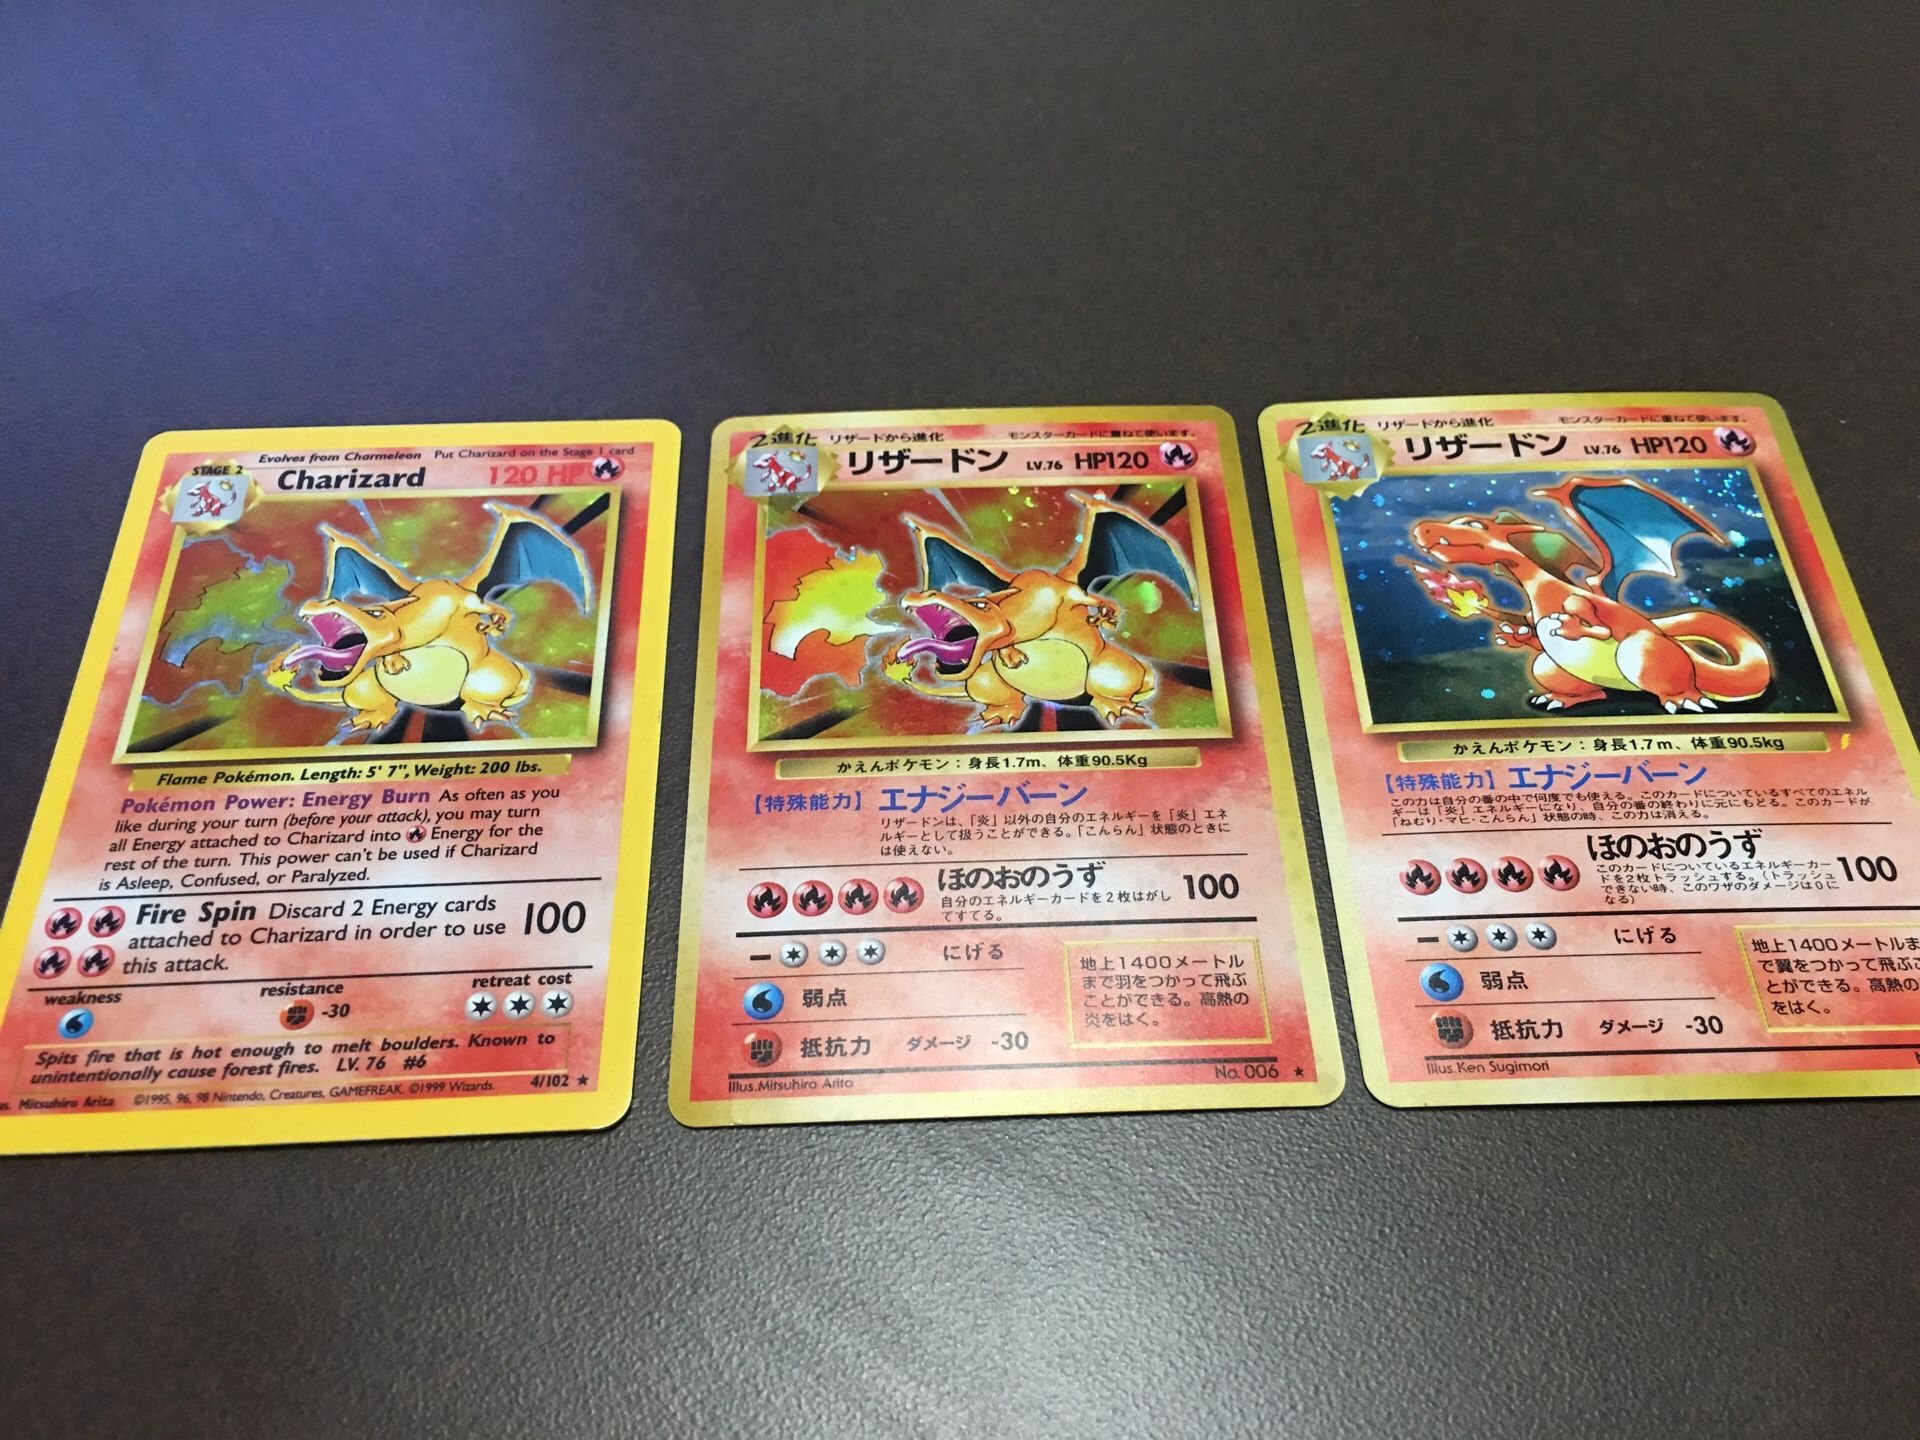 Classic Holographic/Holo/Foil Charizard Base Pokémon Card Lot of 3 (1996-1999)